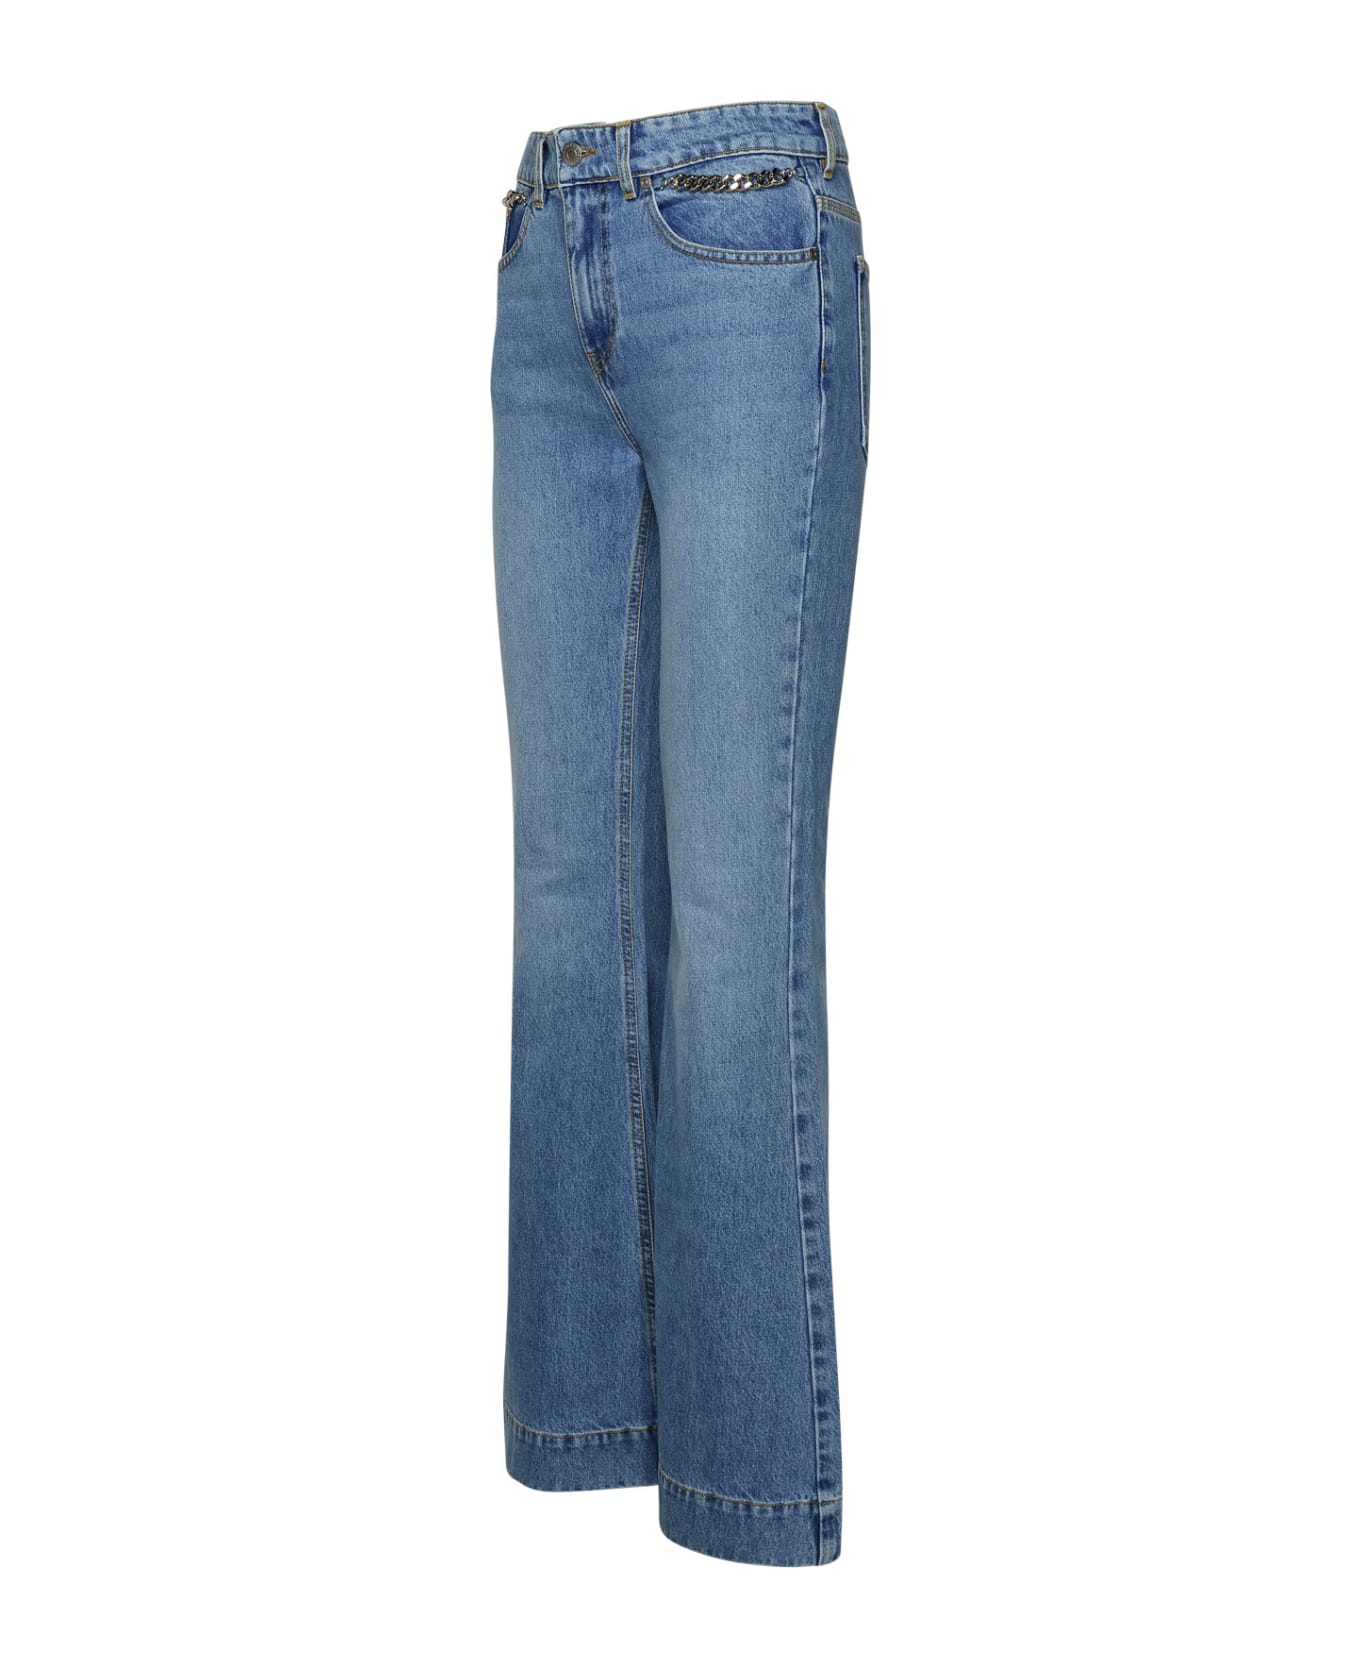 Stella McCartney Falabella Chain Flared Jeans - VINTAGE BLUE